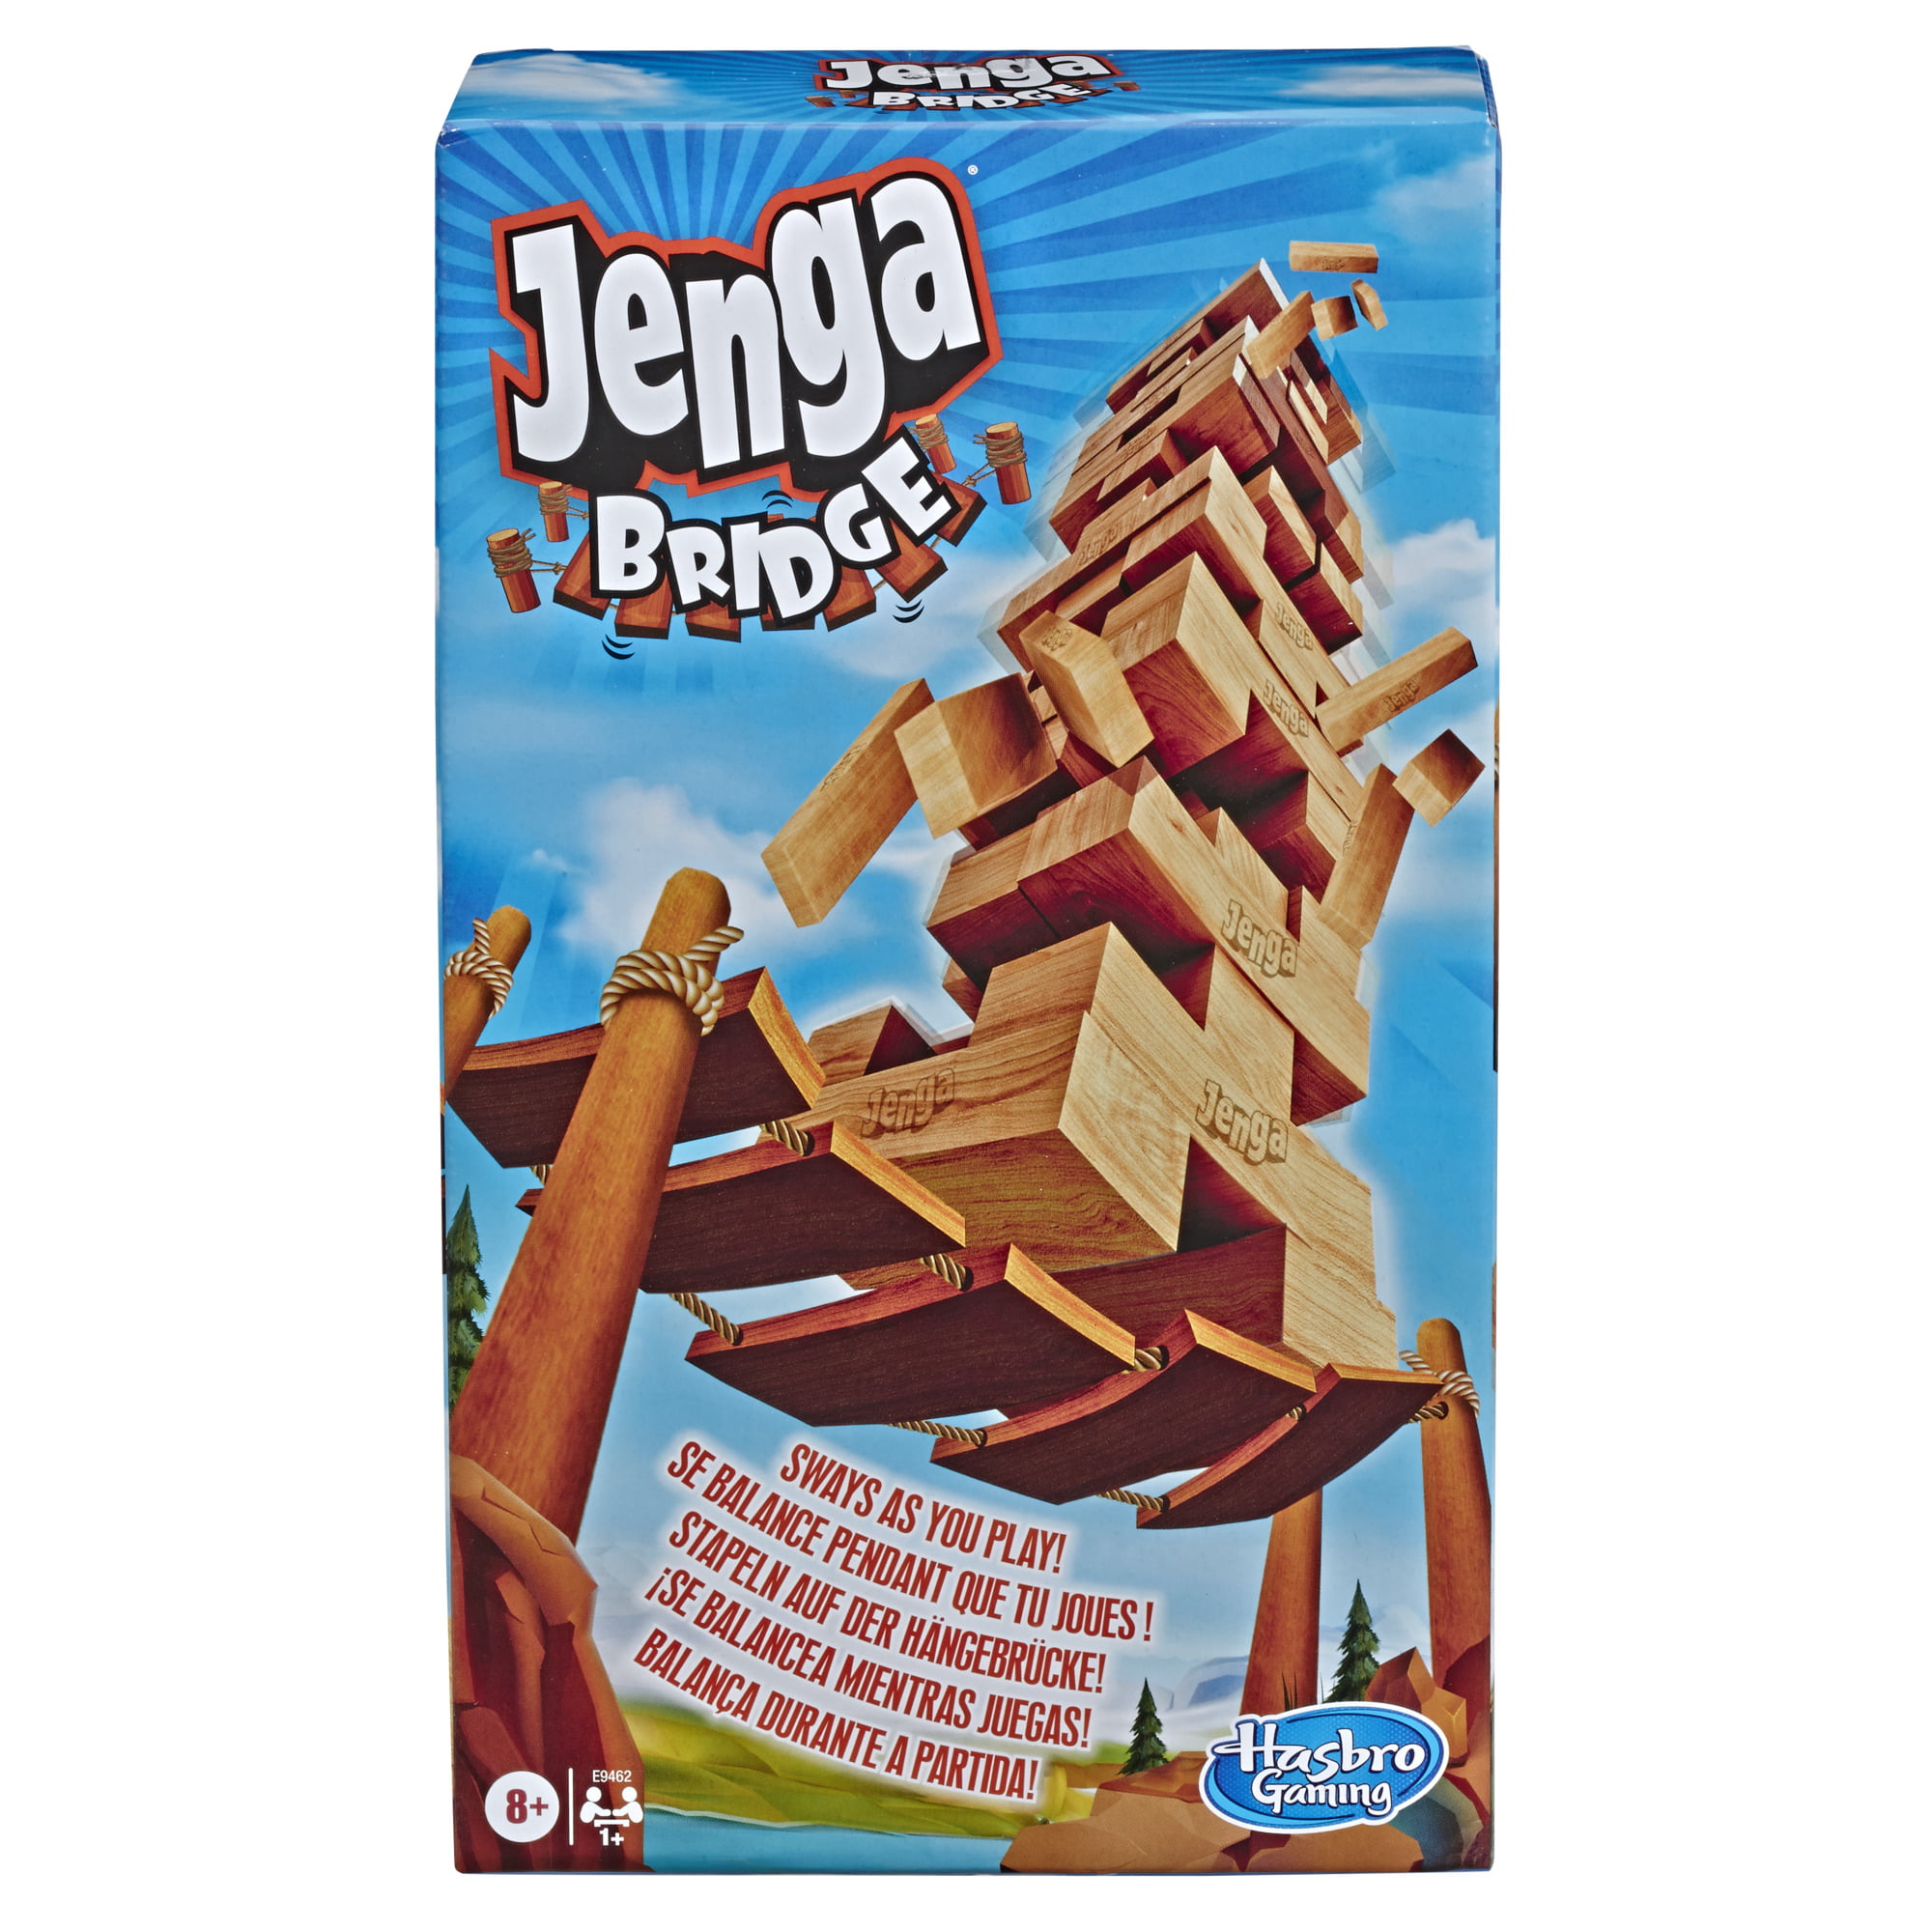 Business Jenga. The game jenga has grown quite popular…